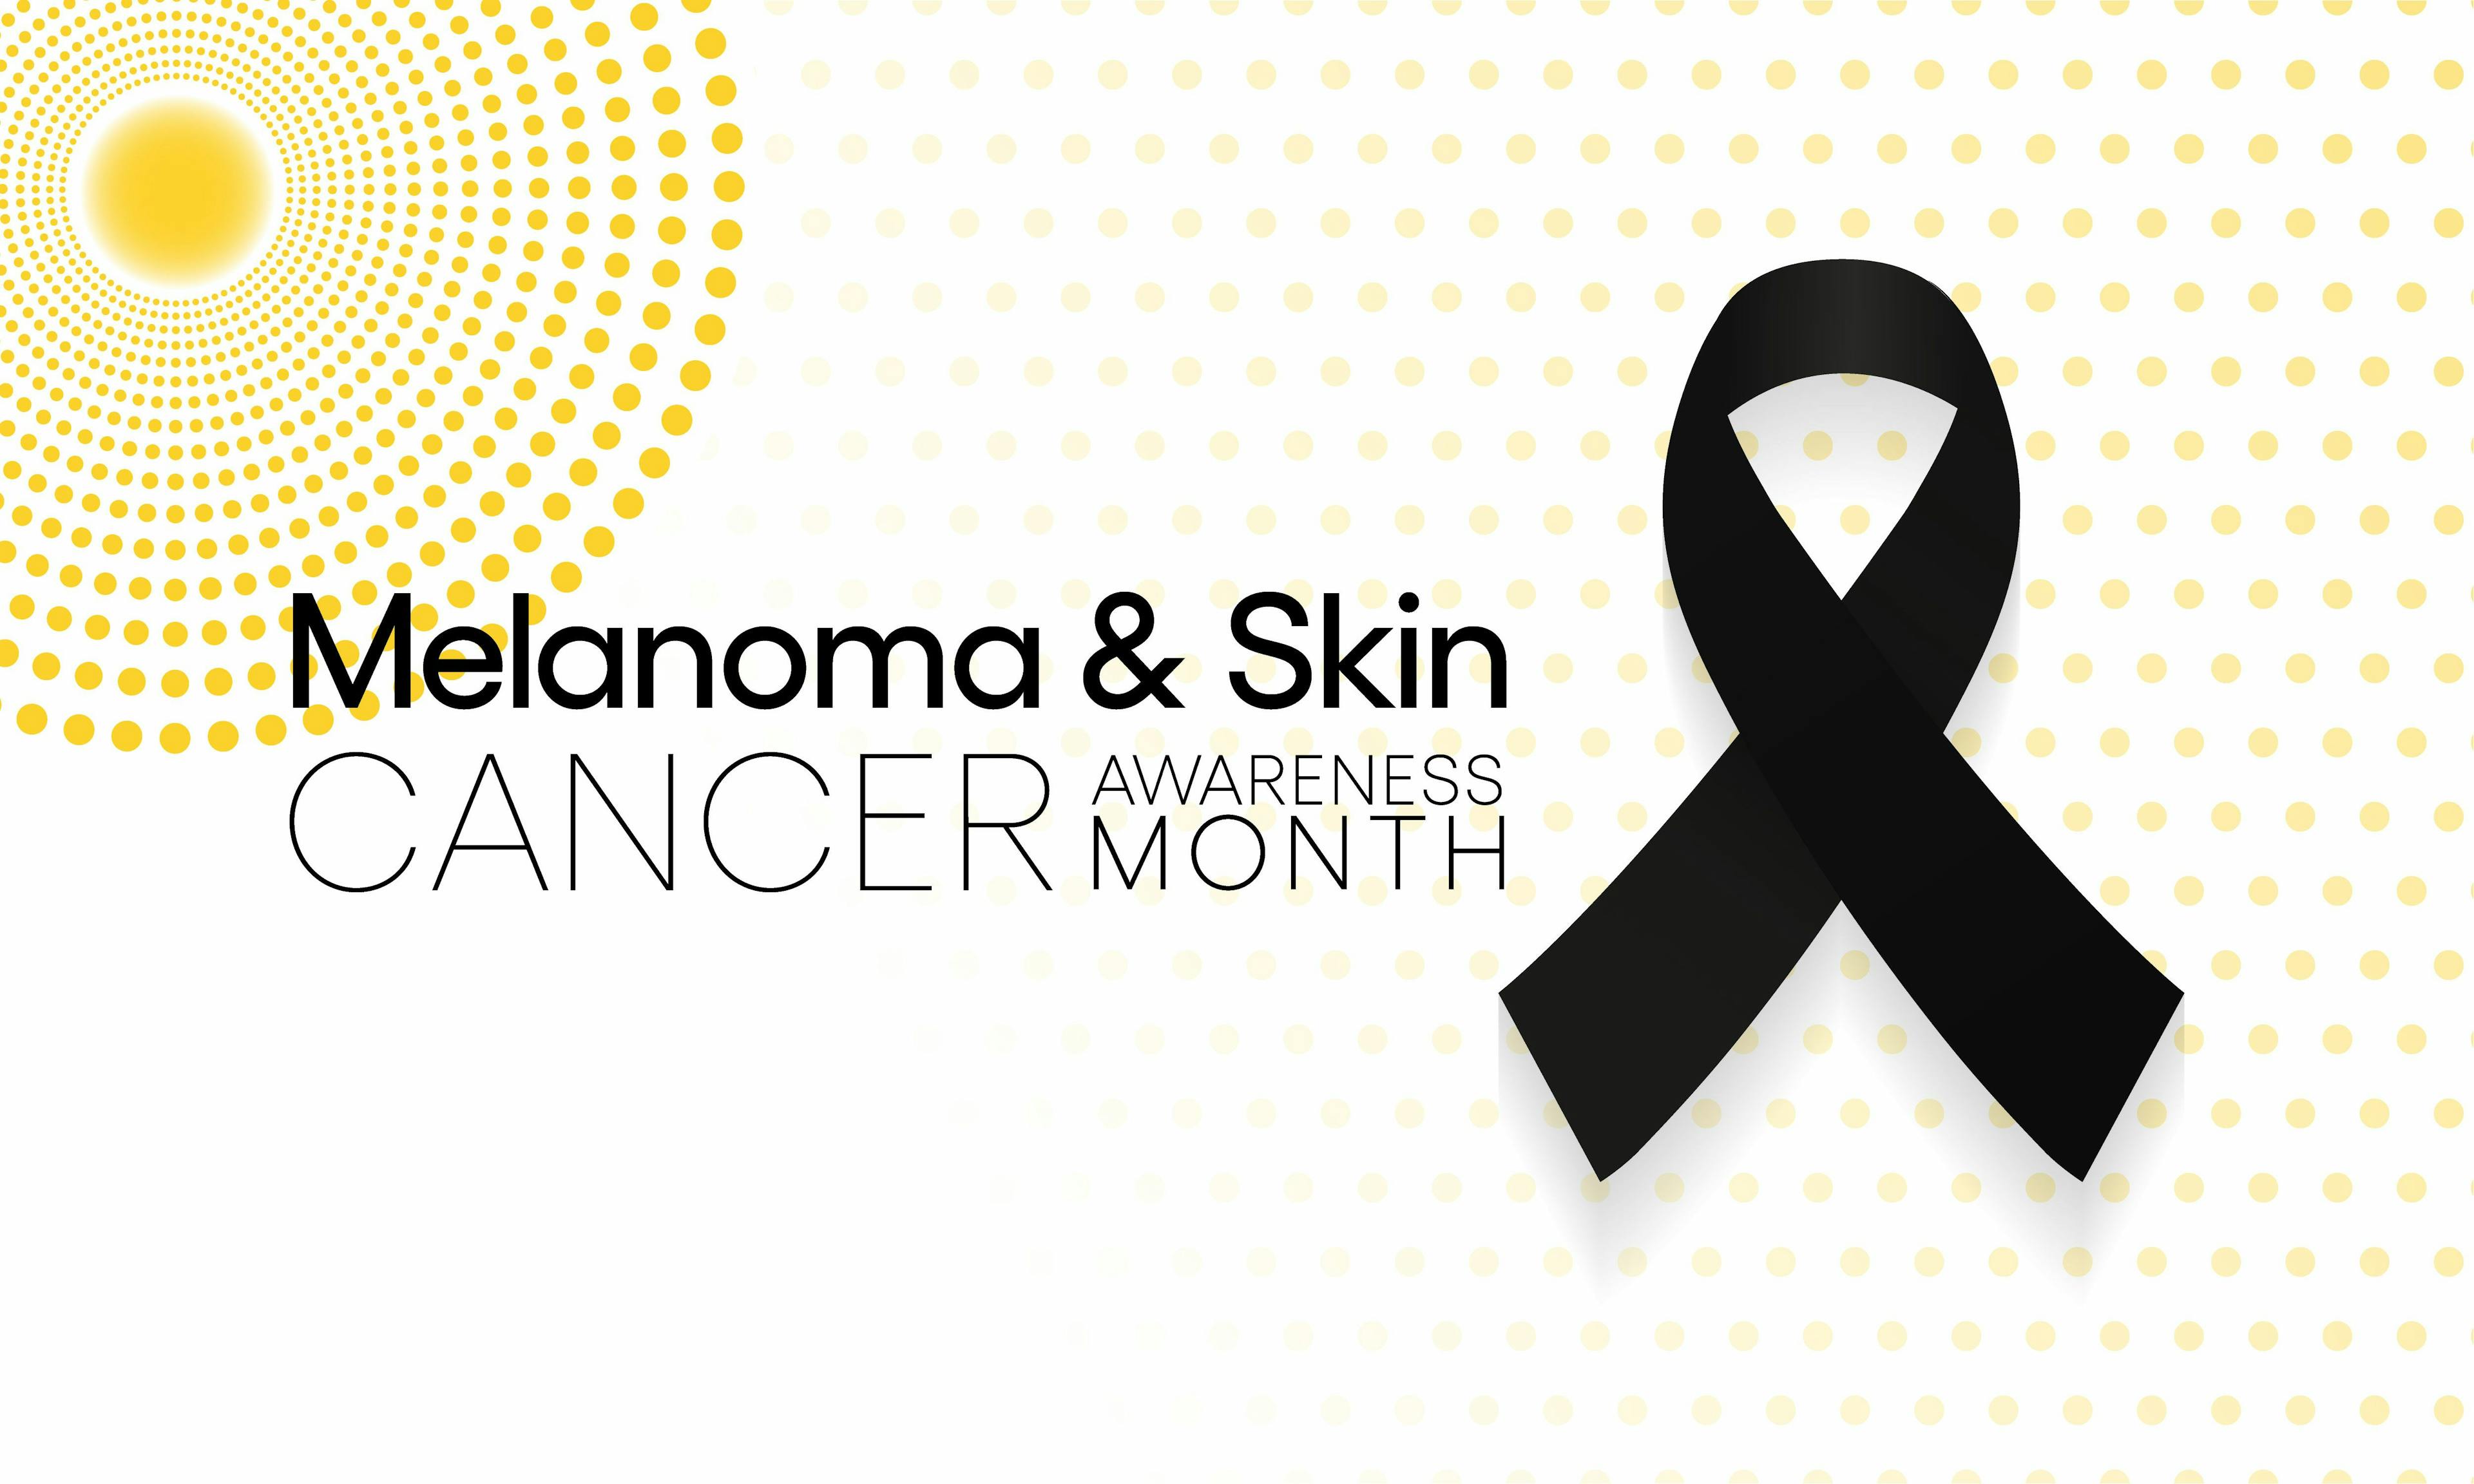 Logo reading "Melanoma and skin cancer awareness month"